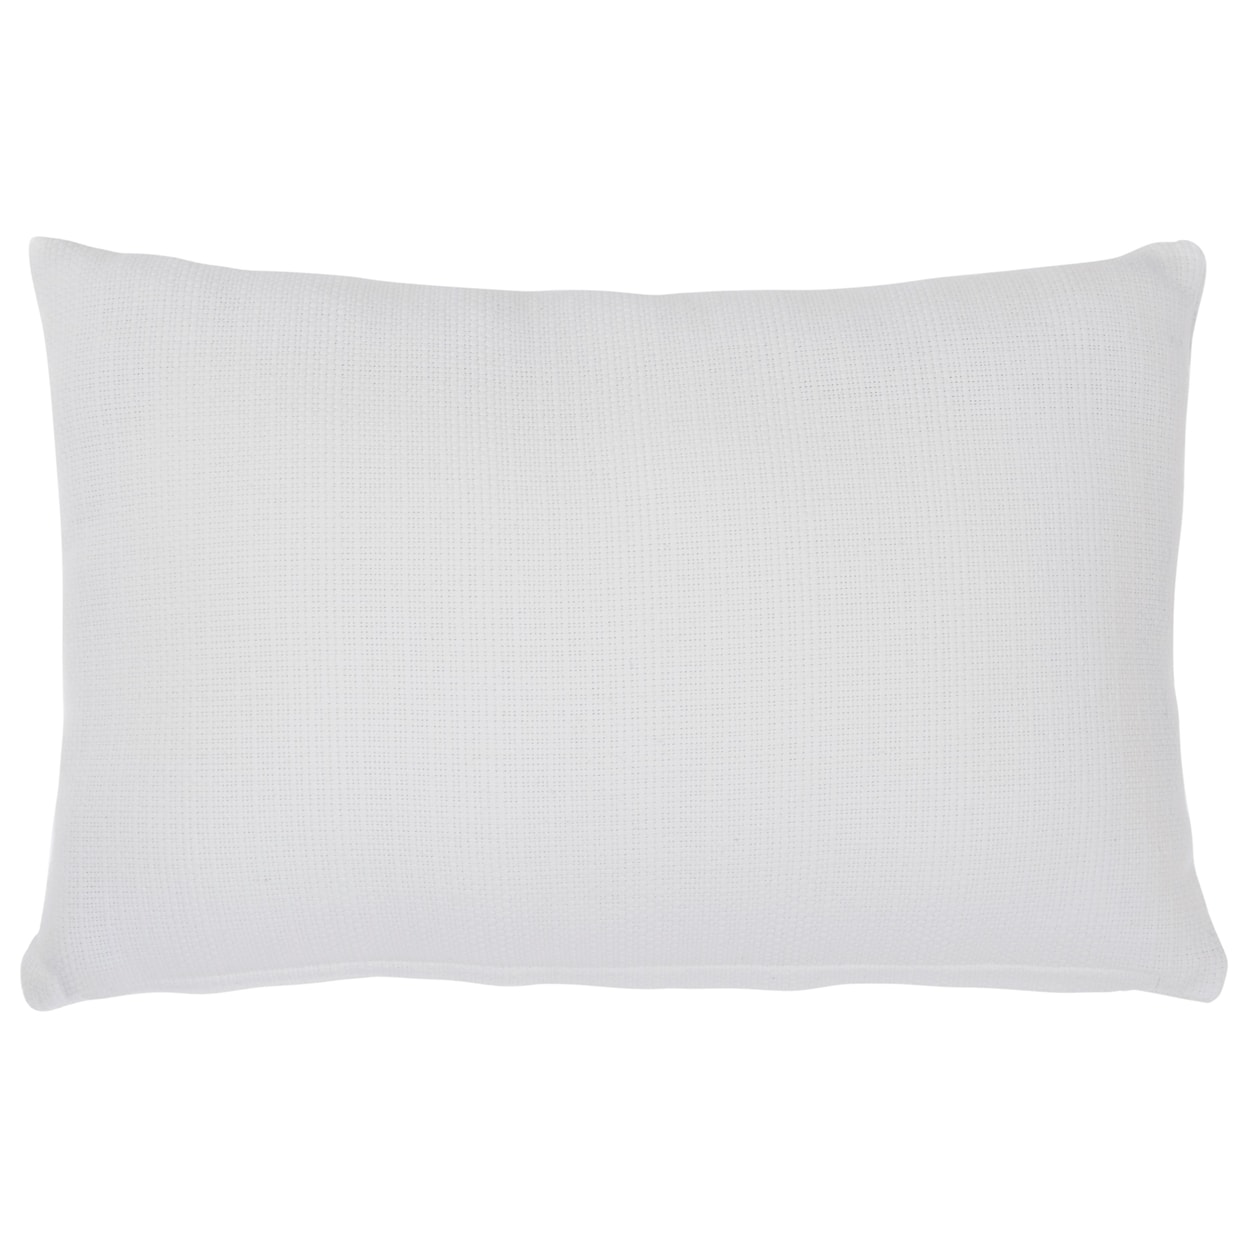 Ashley Furniture Signature Design Pillows Forever White/Gray Pillow